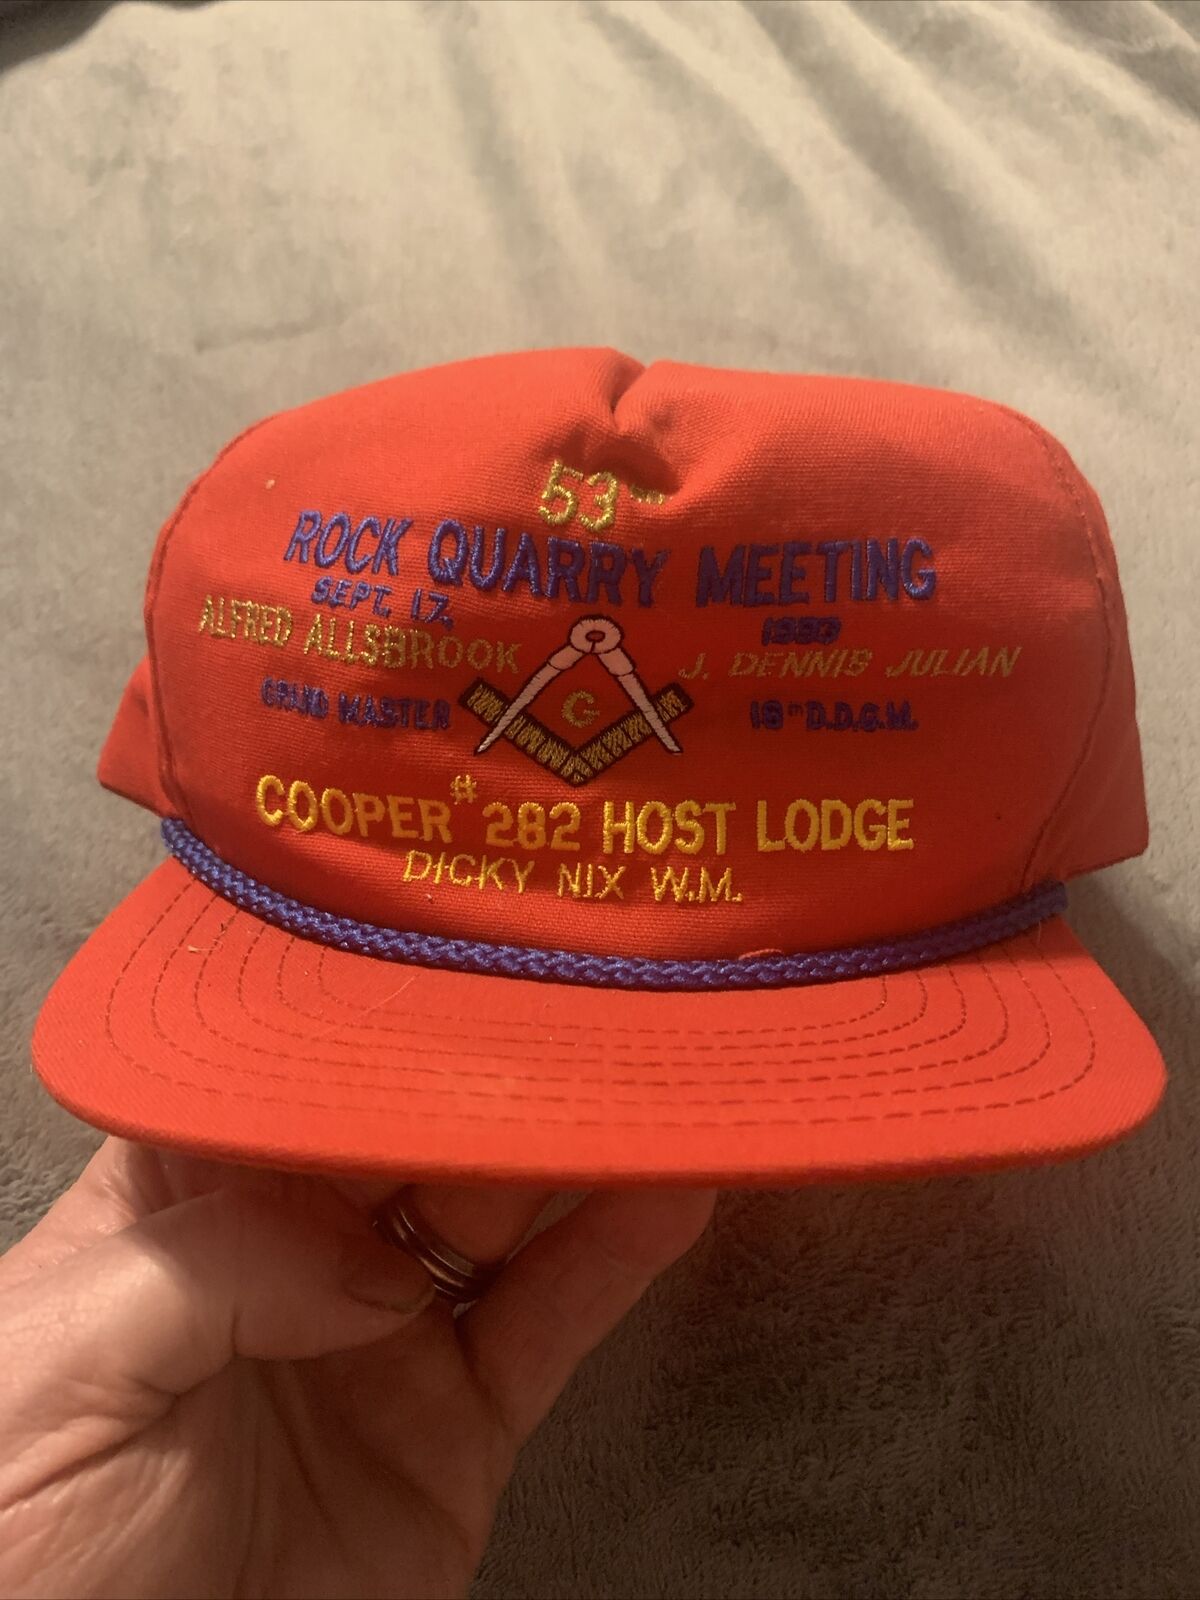 Cooper #282 Host Lodge 53rd Rock Quarry Meeting Sept 17, 1993 Masonic Red Hat